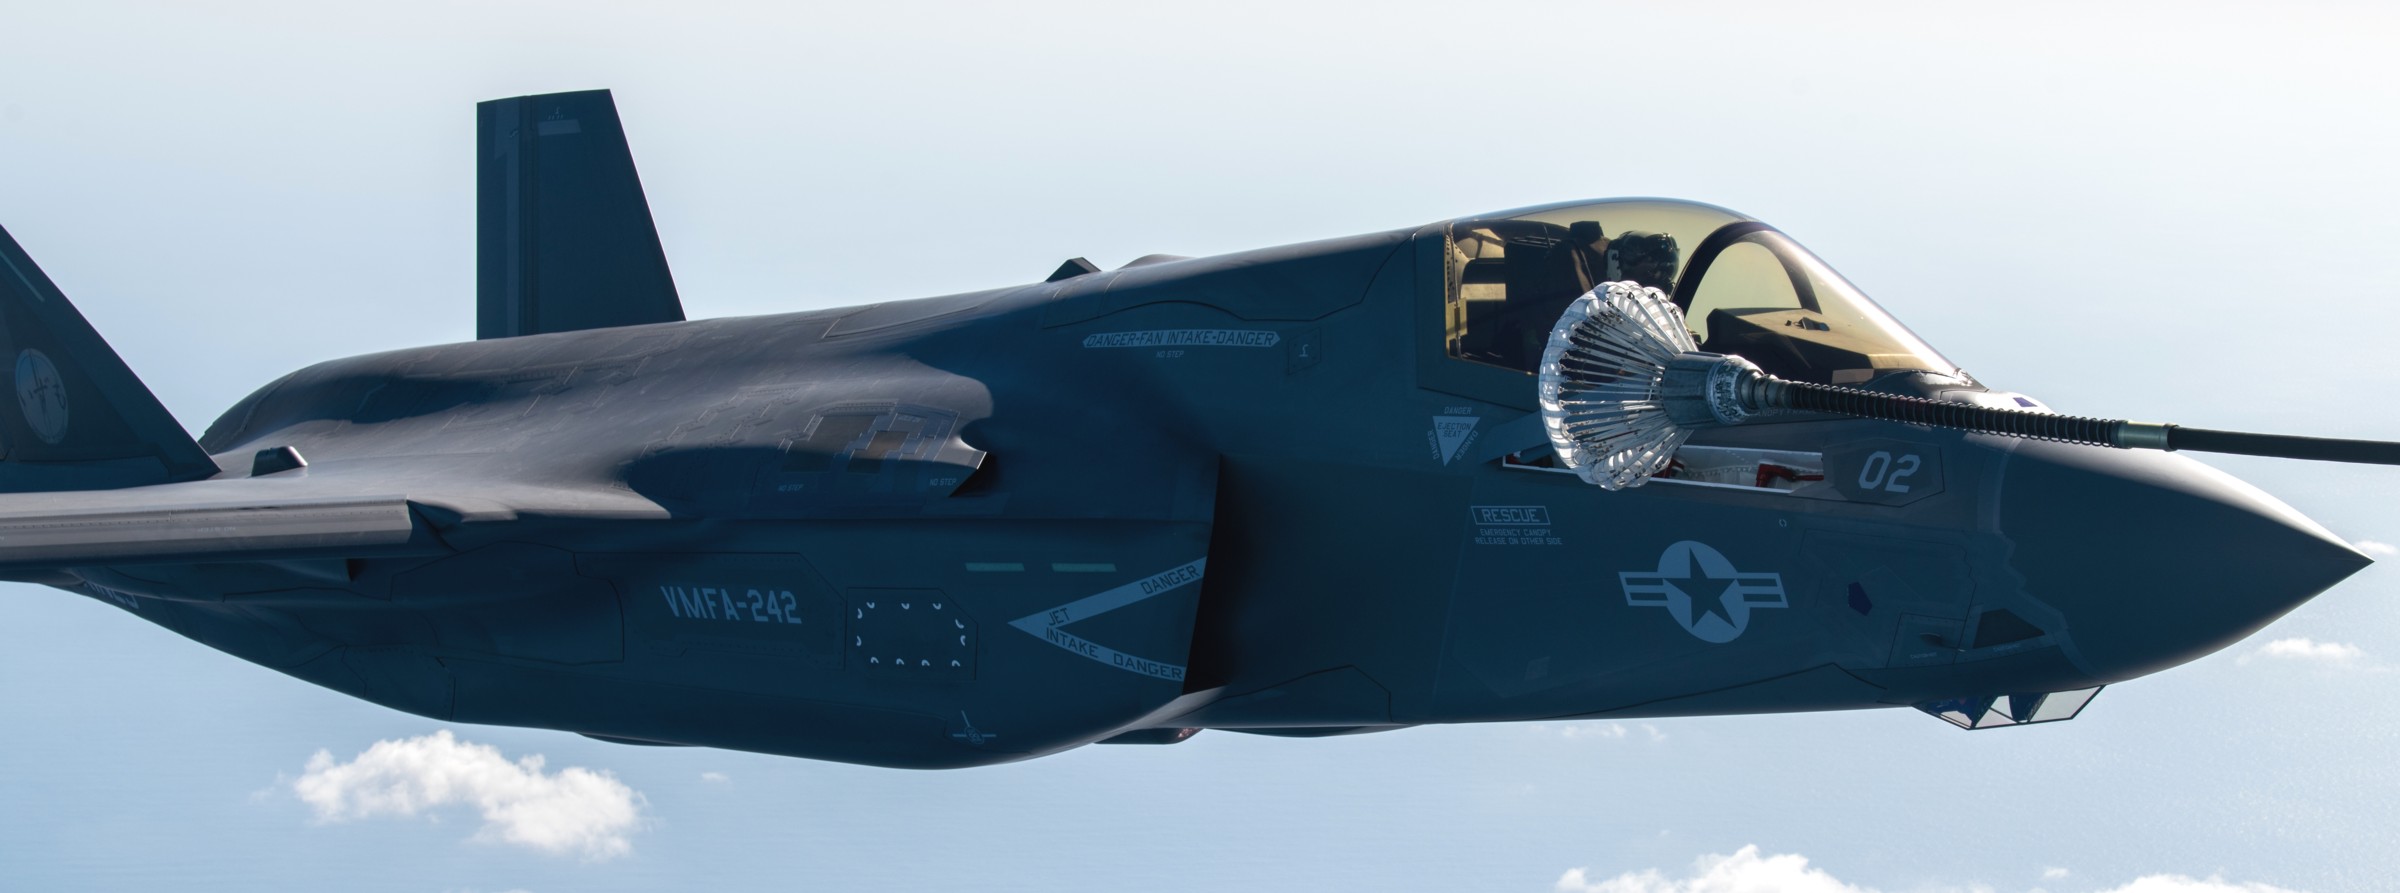 vmfa-242 bats marine fighter attack squadron usmc f-35b lightning ii 15